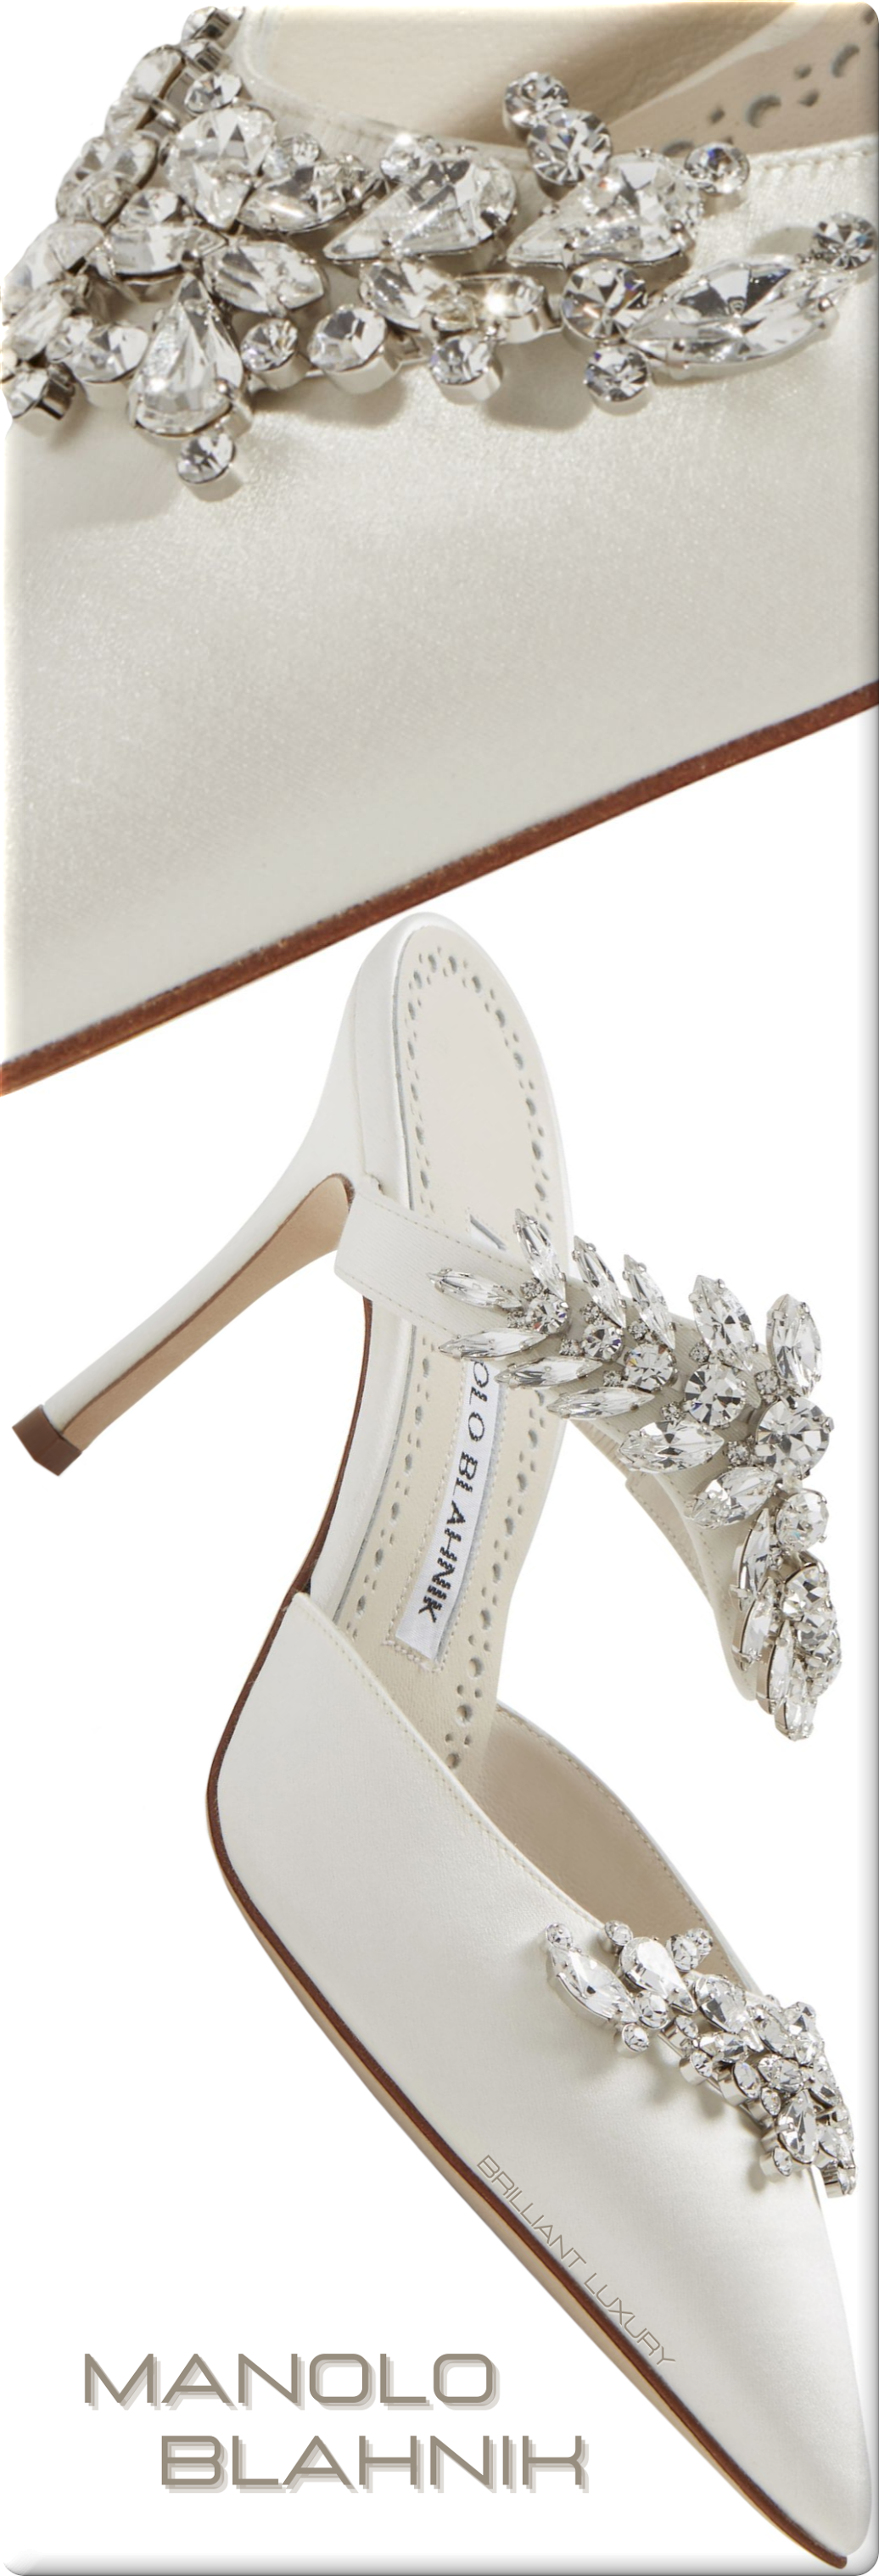 ♦Manolo Blahnik Lurum off-white satin crystal embellished mules #manoloblahnik #shoes #brilliantluxury